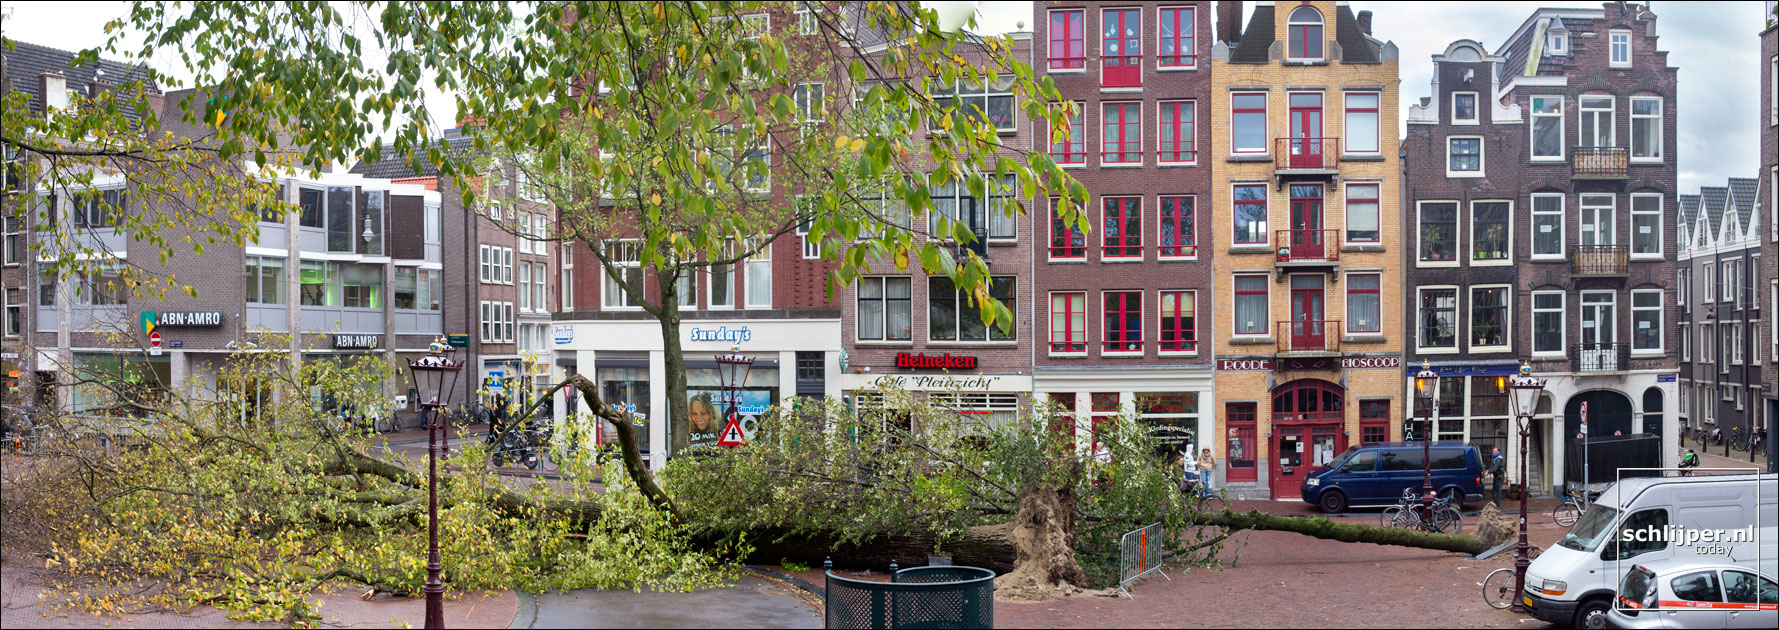 Nederland, Amsterdam, 28 oktober 2013